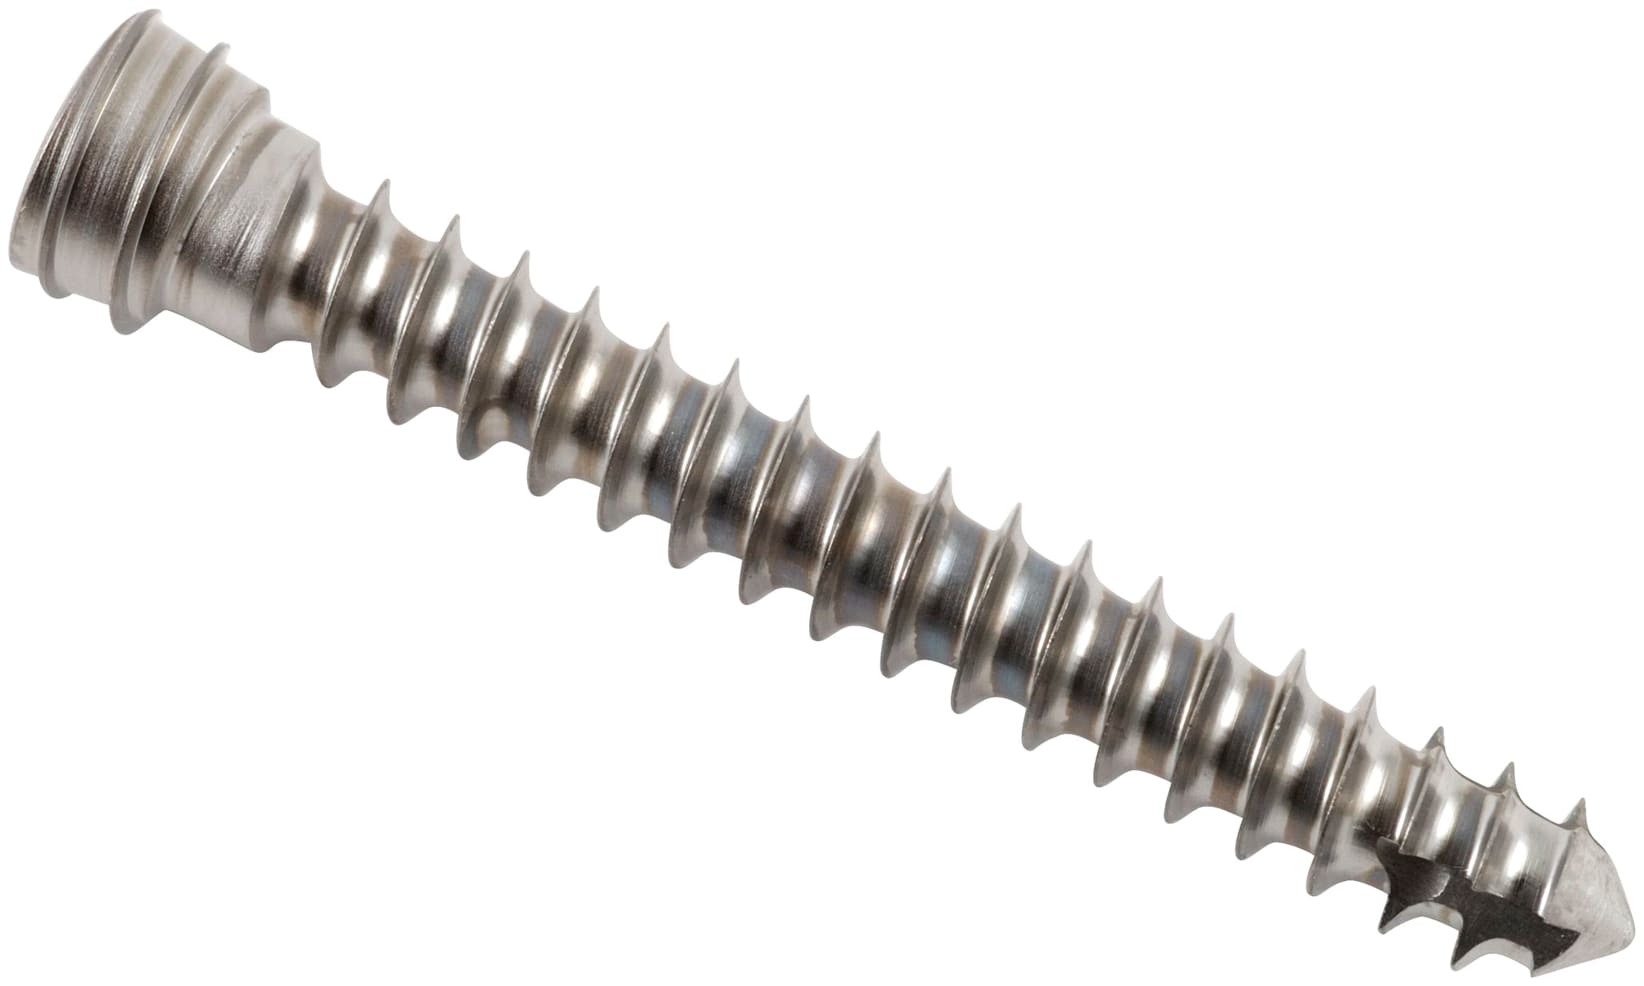 Cortical Locking Screw, 3.5 mm x 28 mm